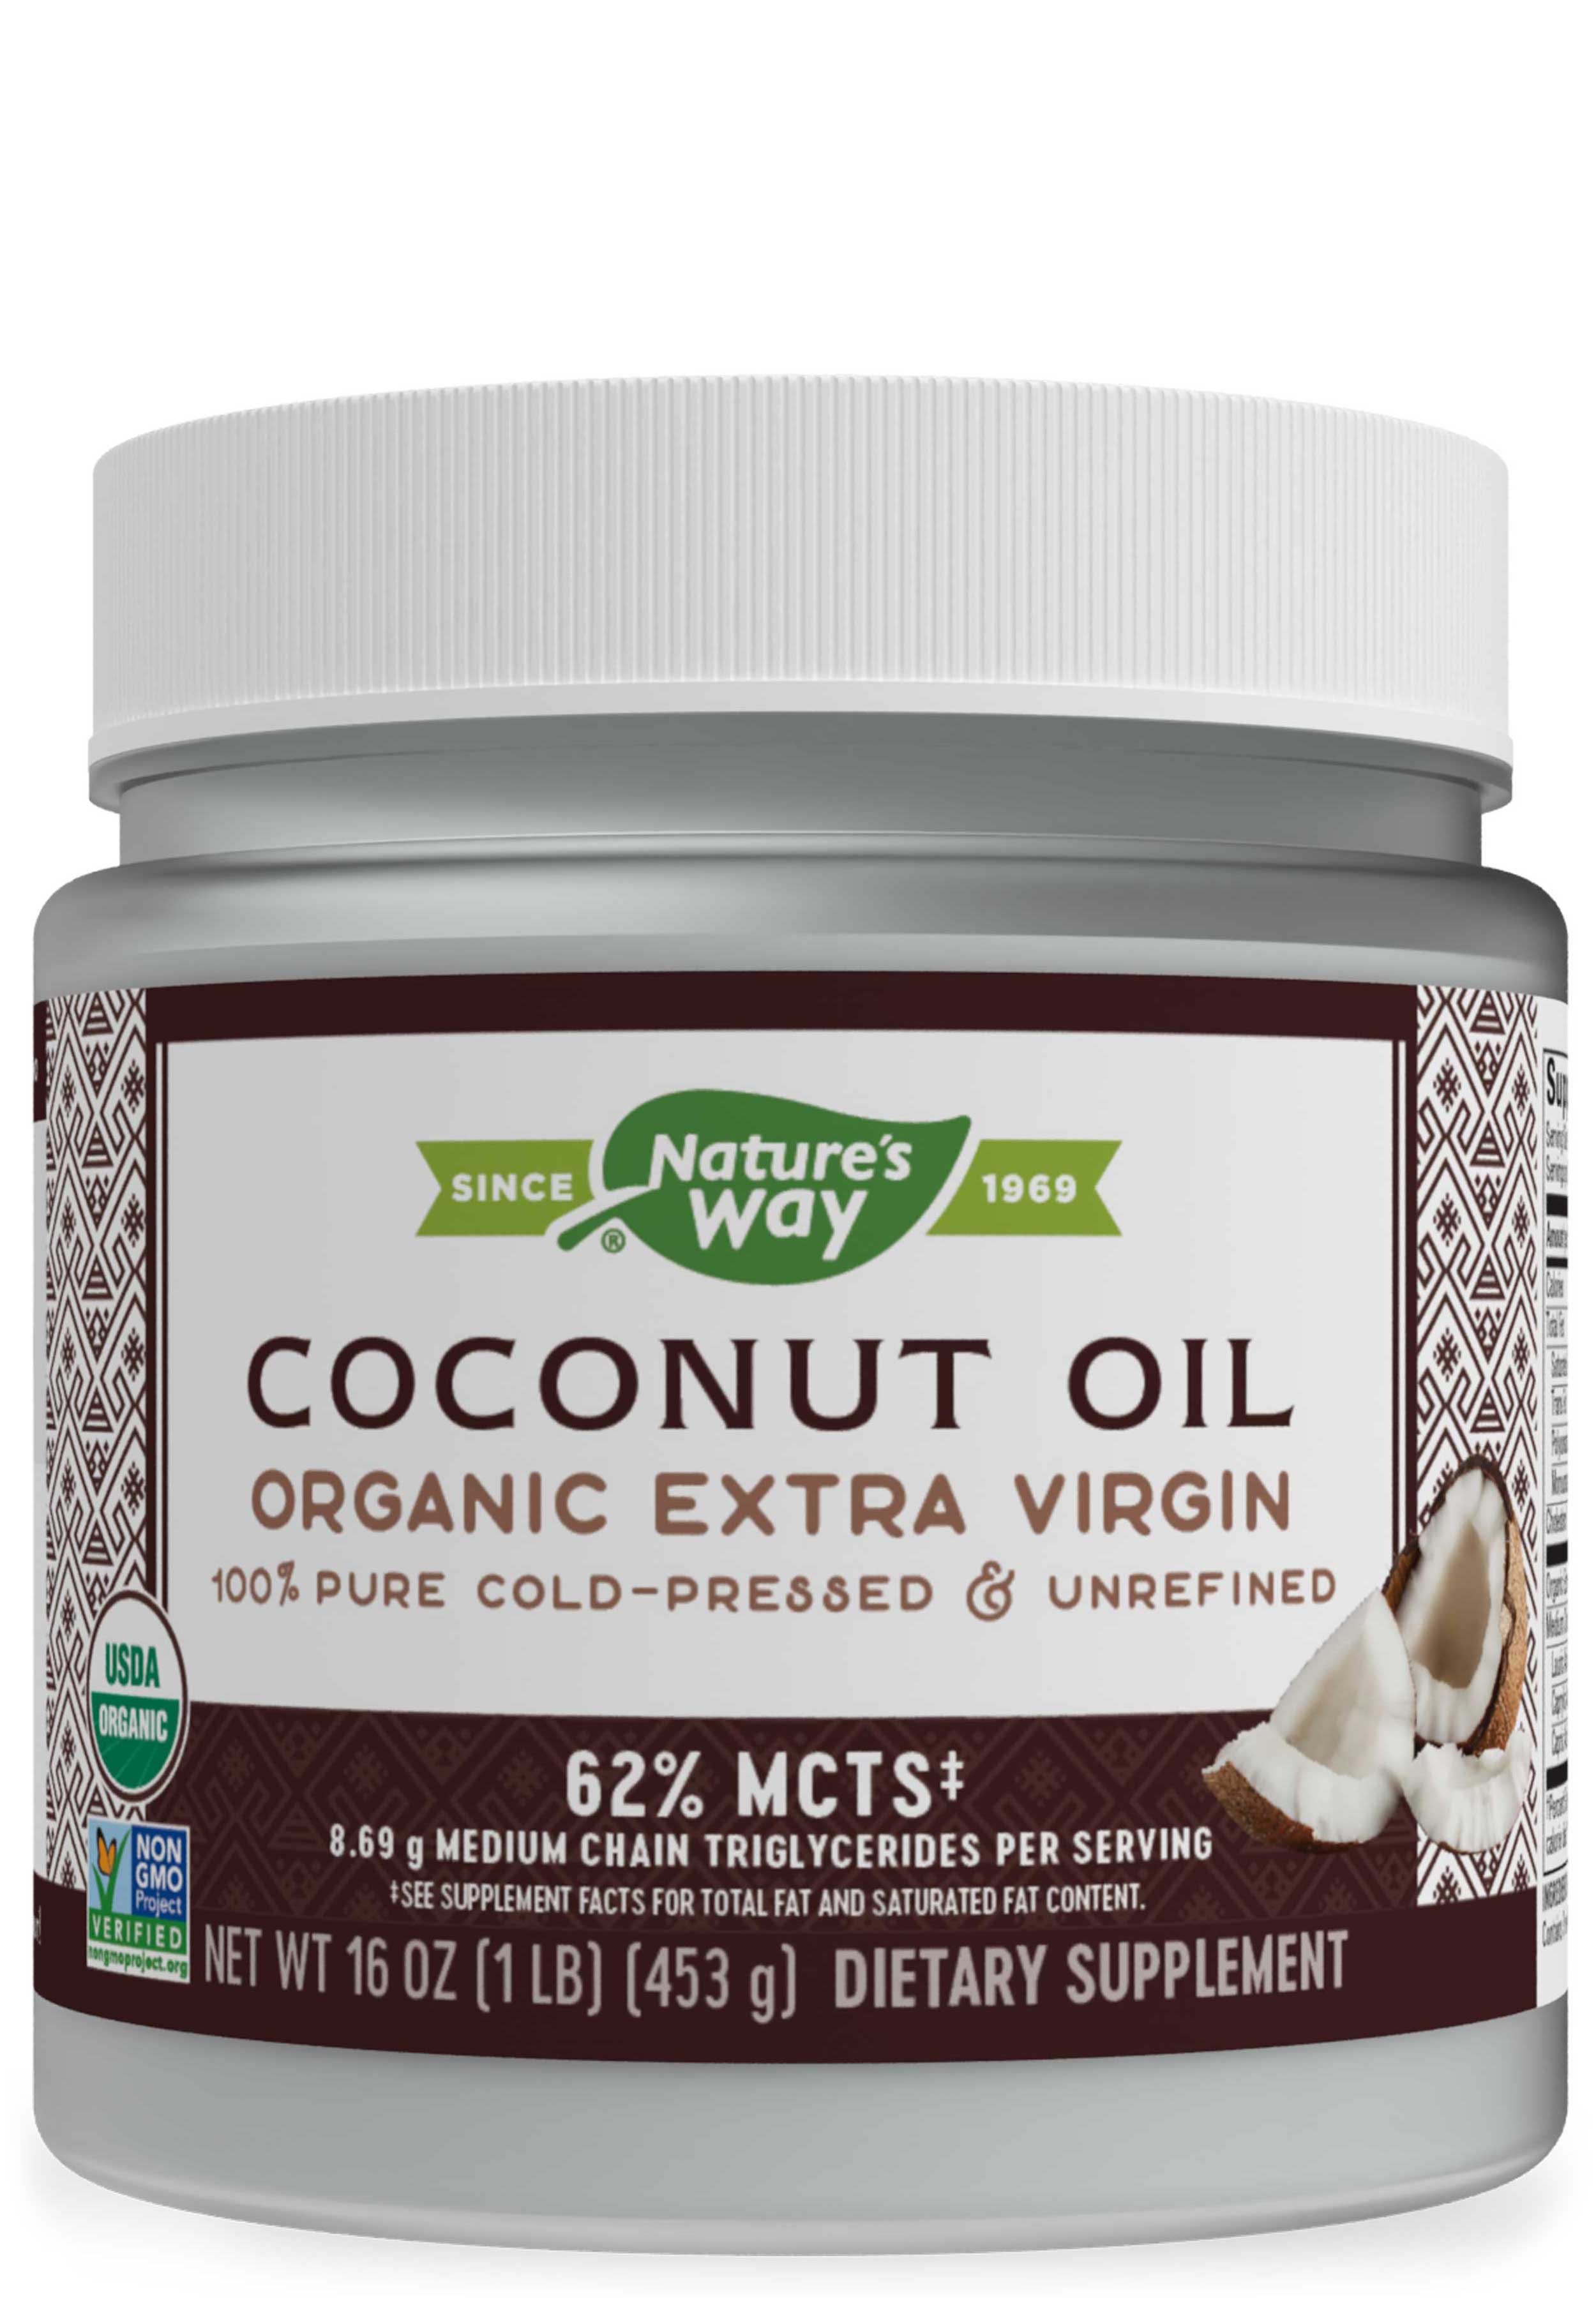 Nature's Way Coconut Oil Organic Extra Virgin